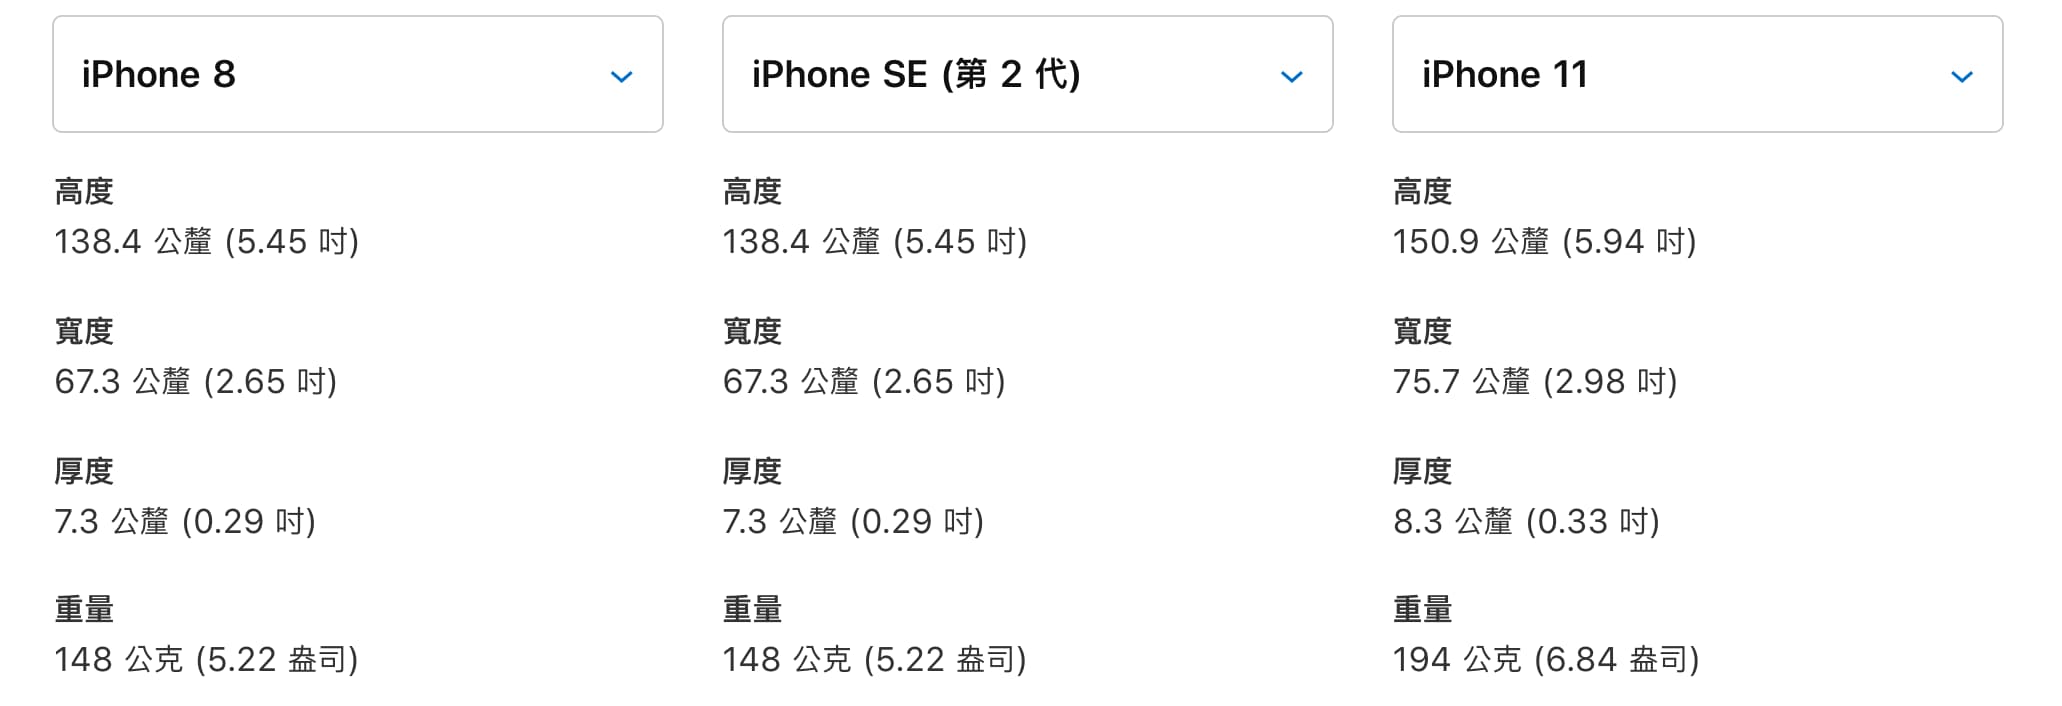 iphonese vs iphone8 vs iphone11 5